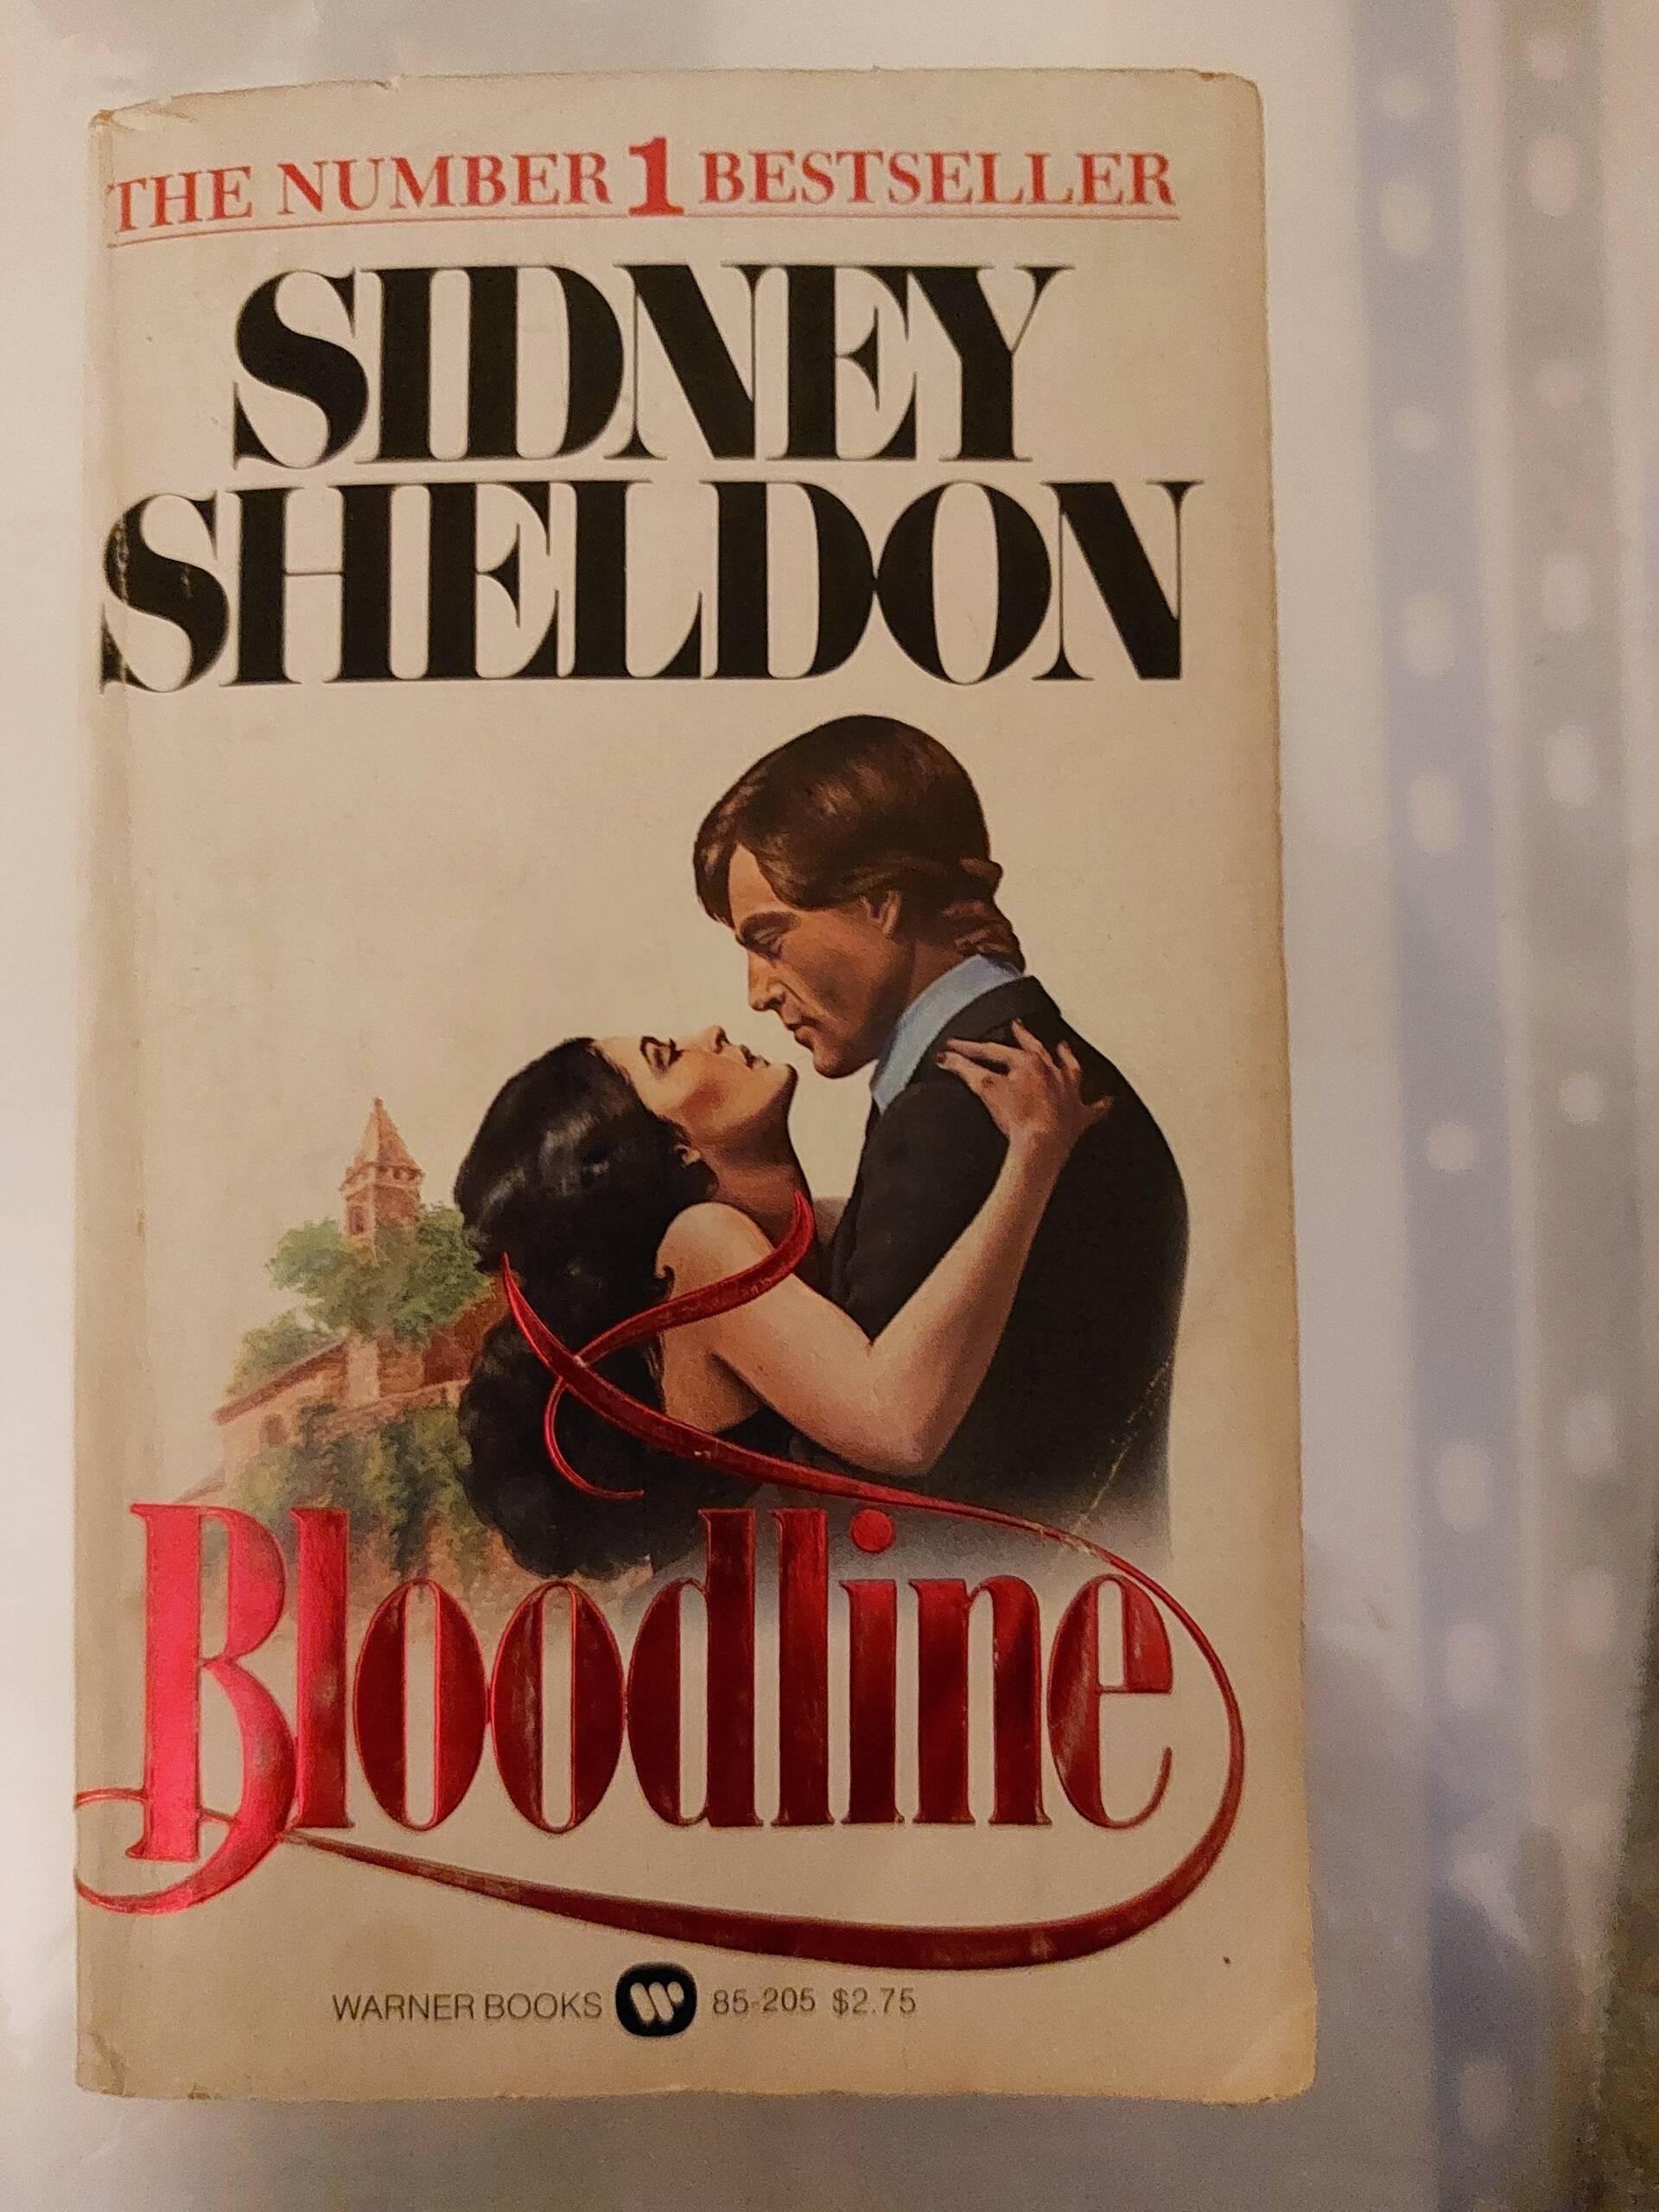 “Bloodline” by Sidney Sheldon